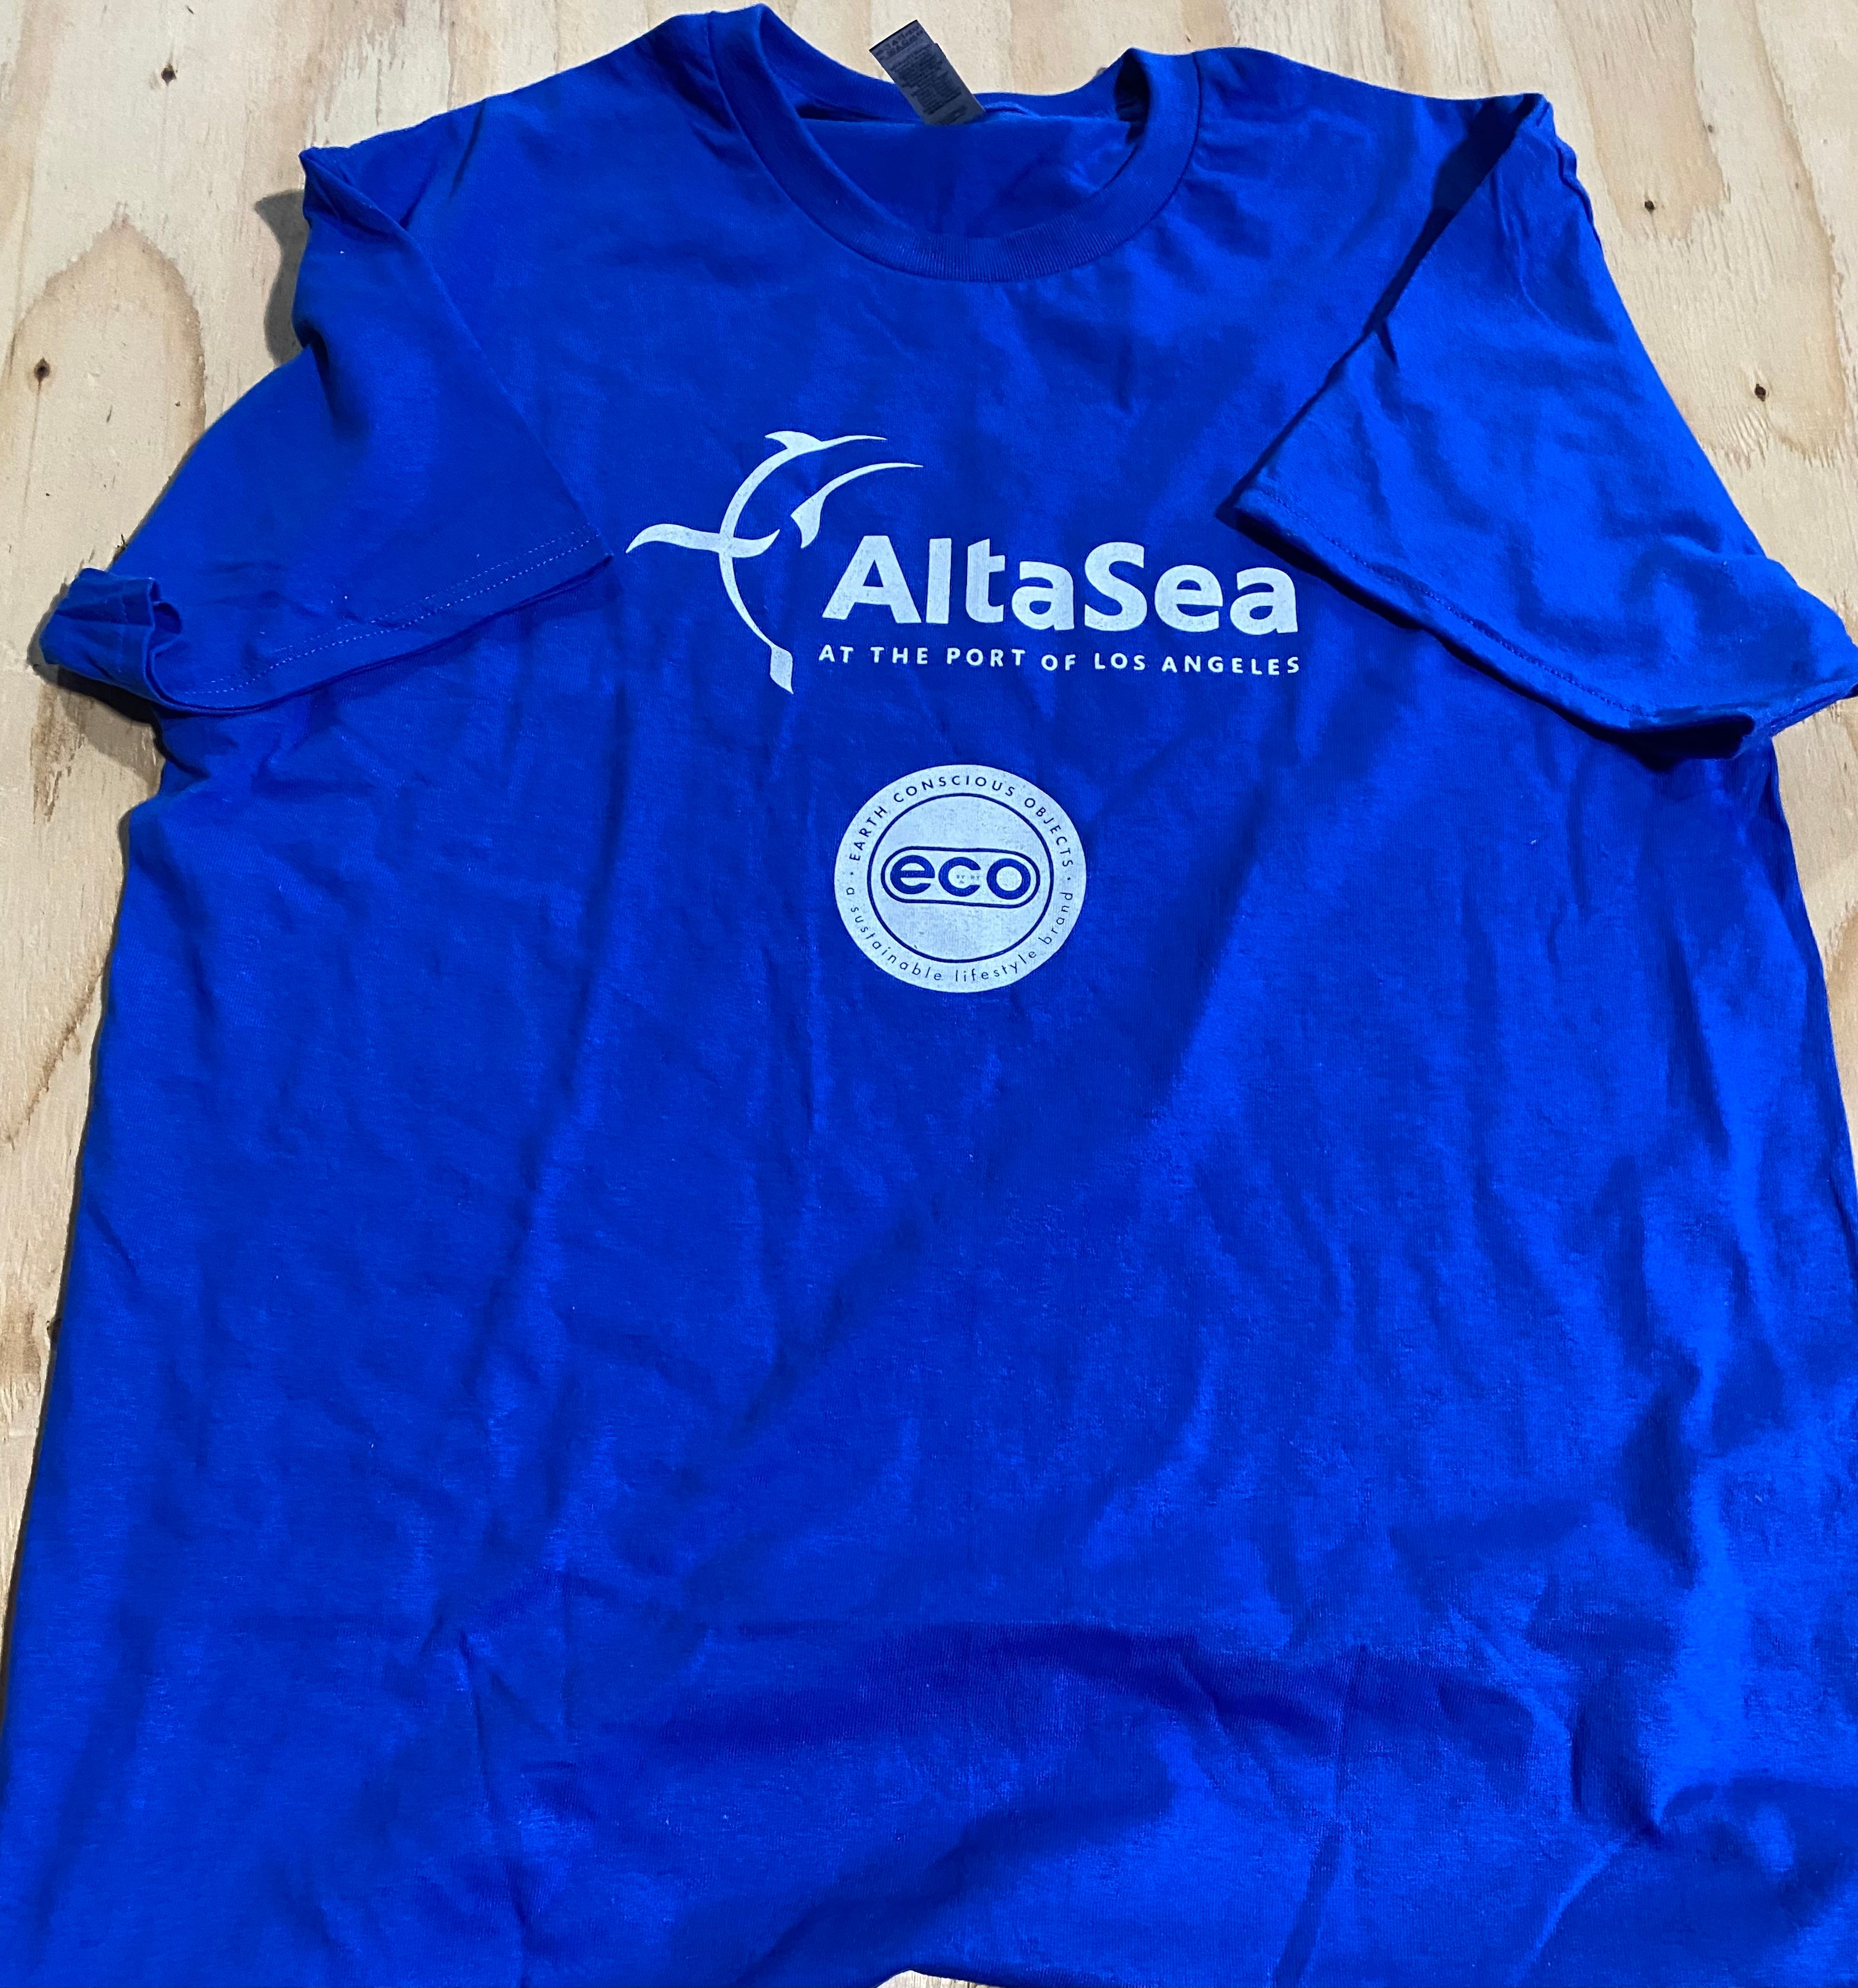 The AltaSea Casual Tshirt